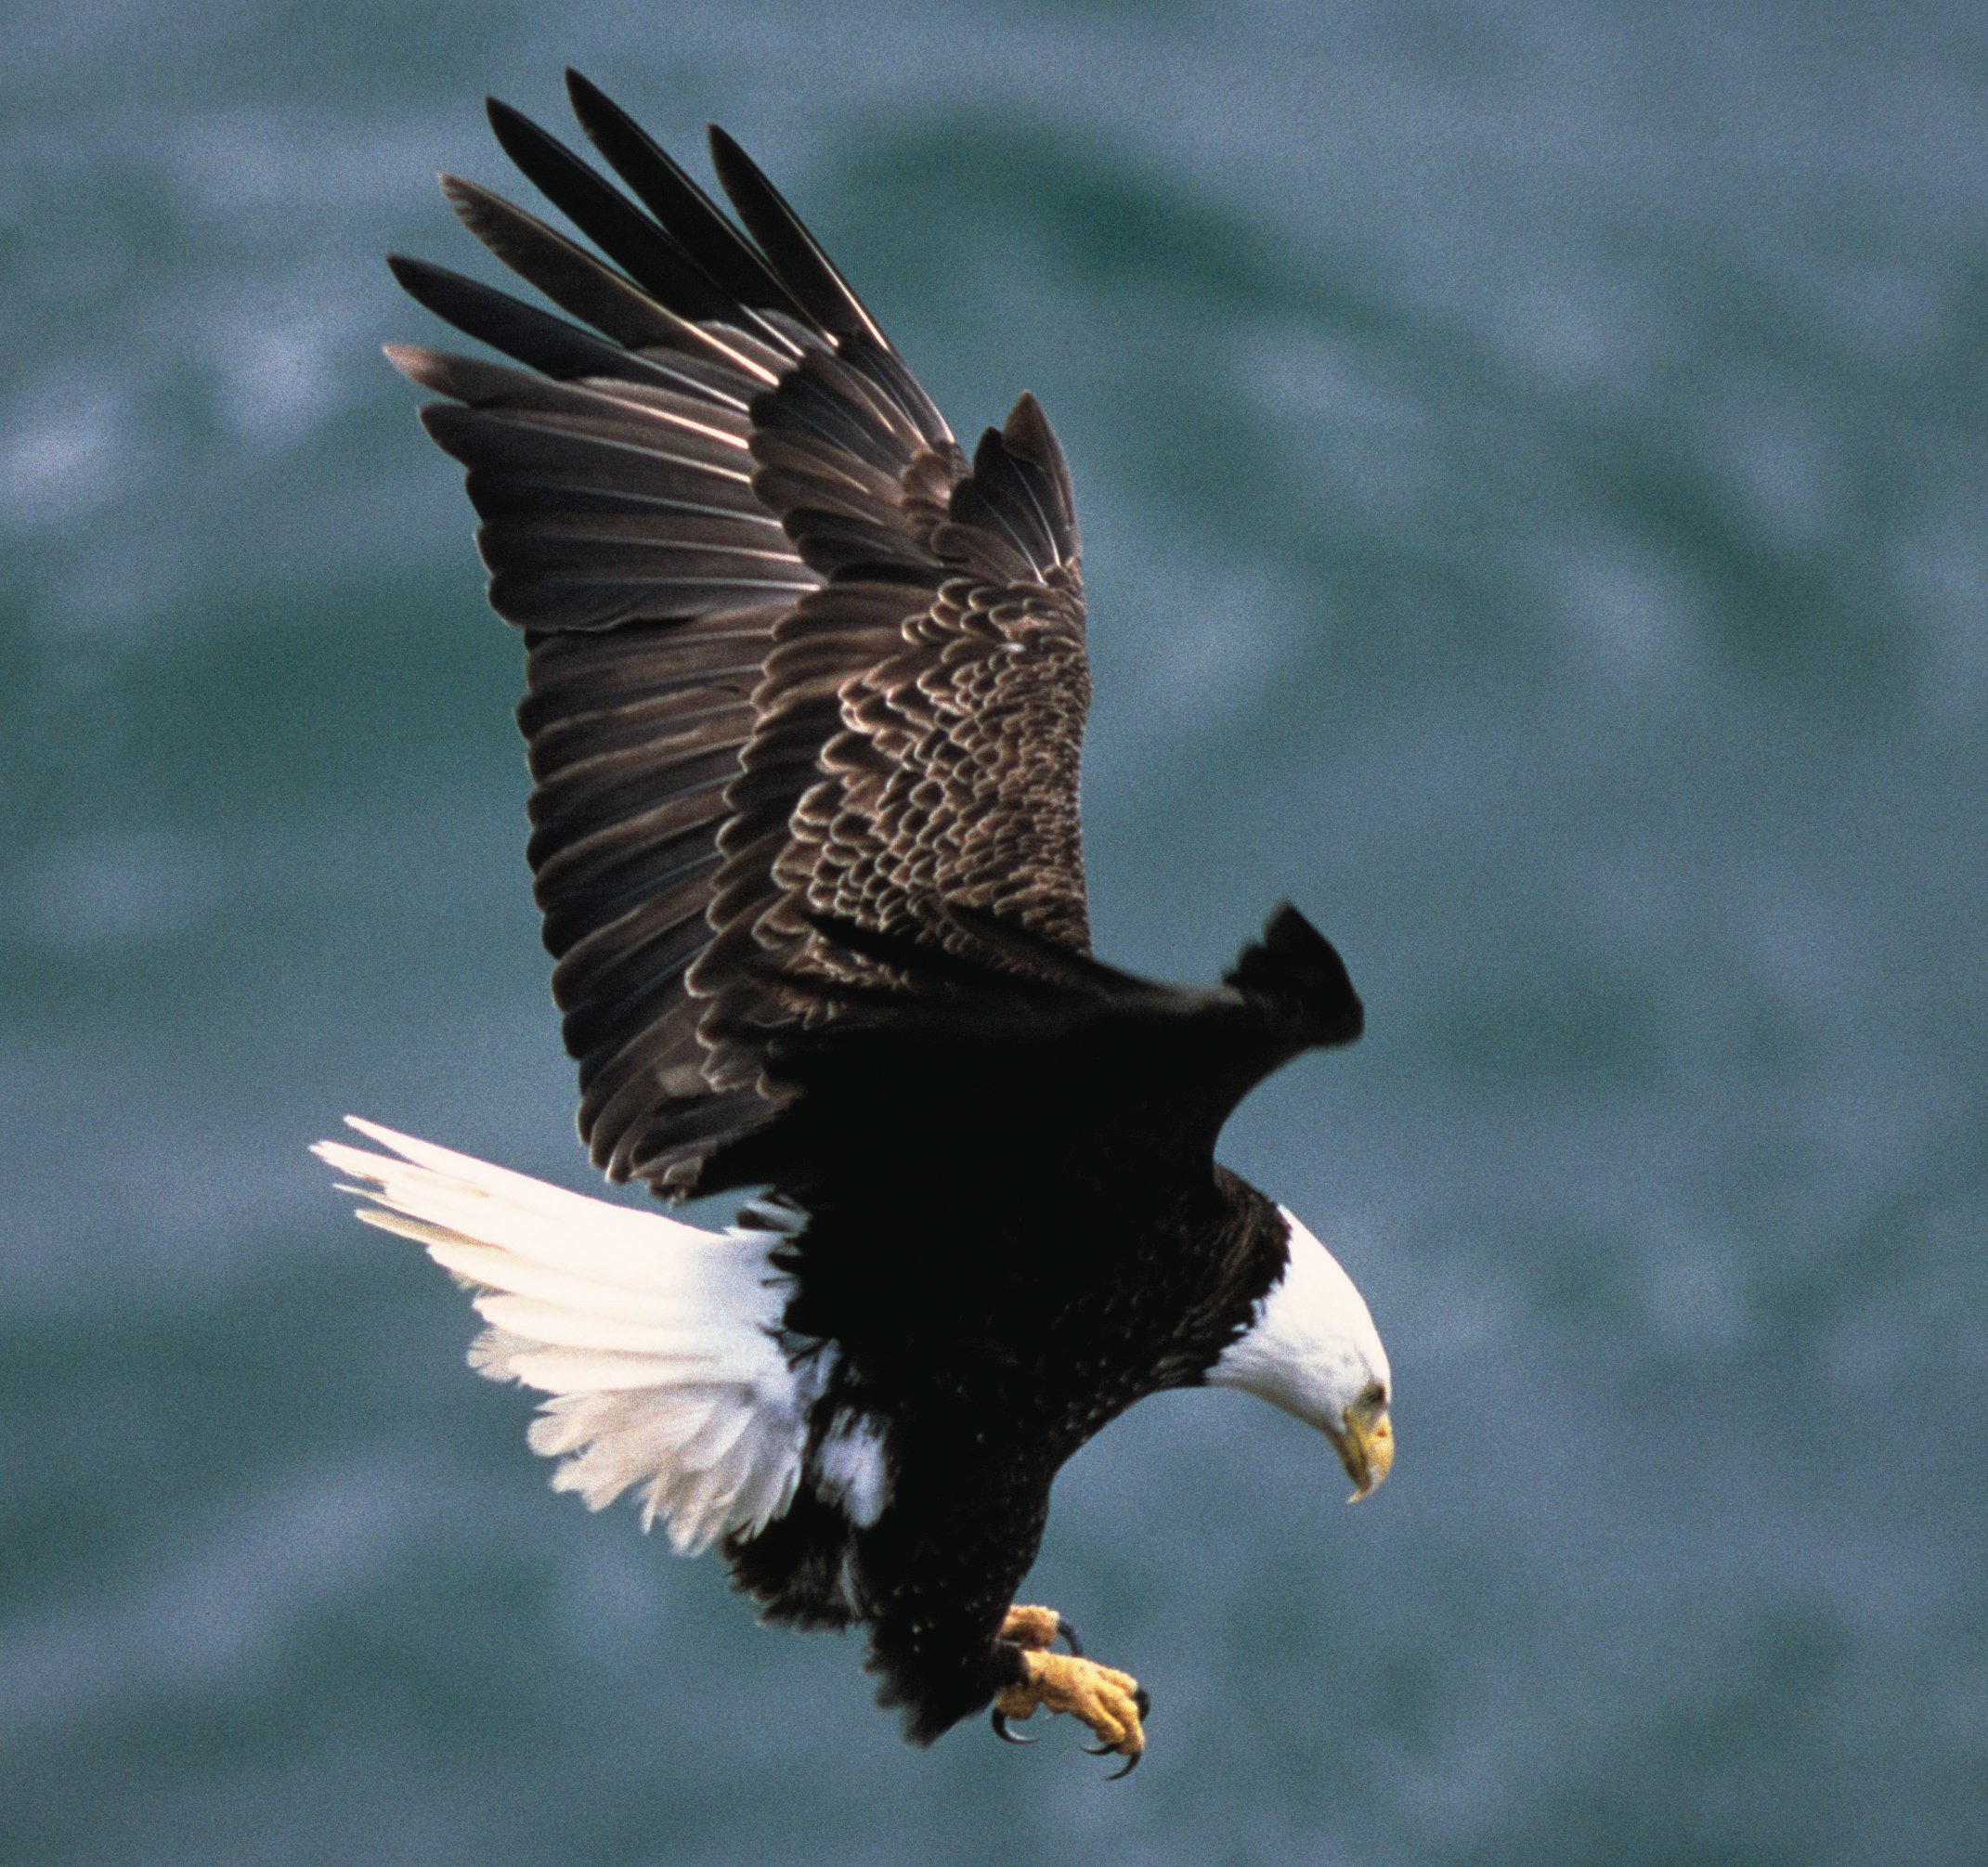 File:Bald eagle landing.jpg - Wikimedia Commons